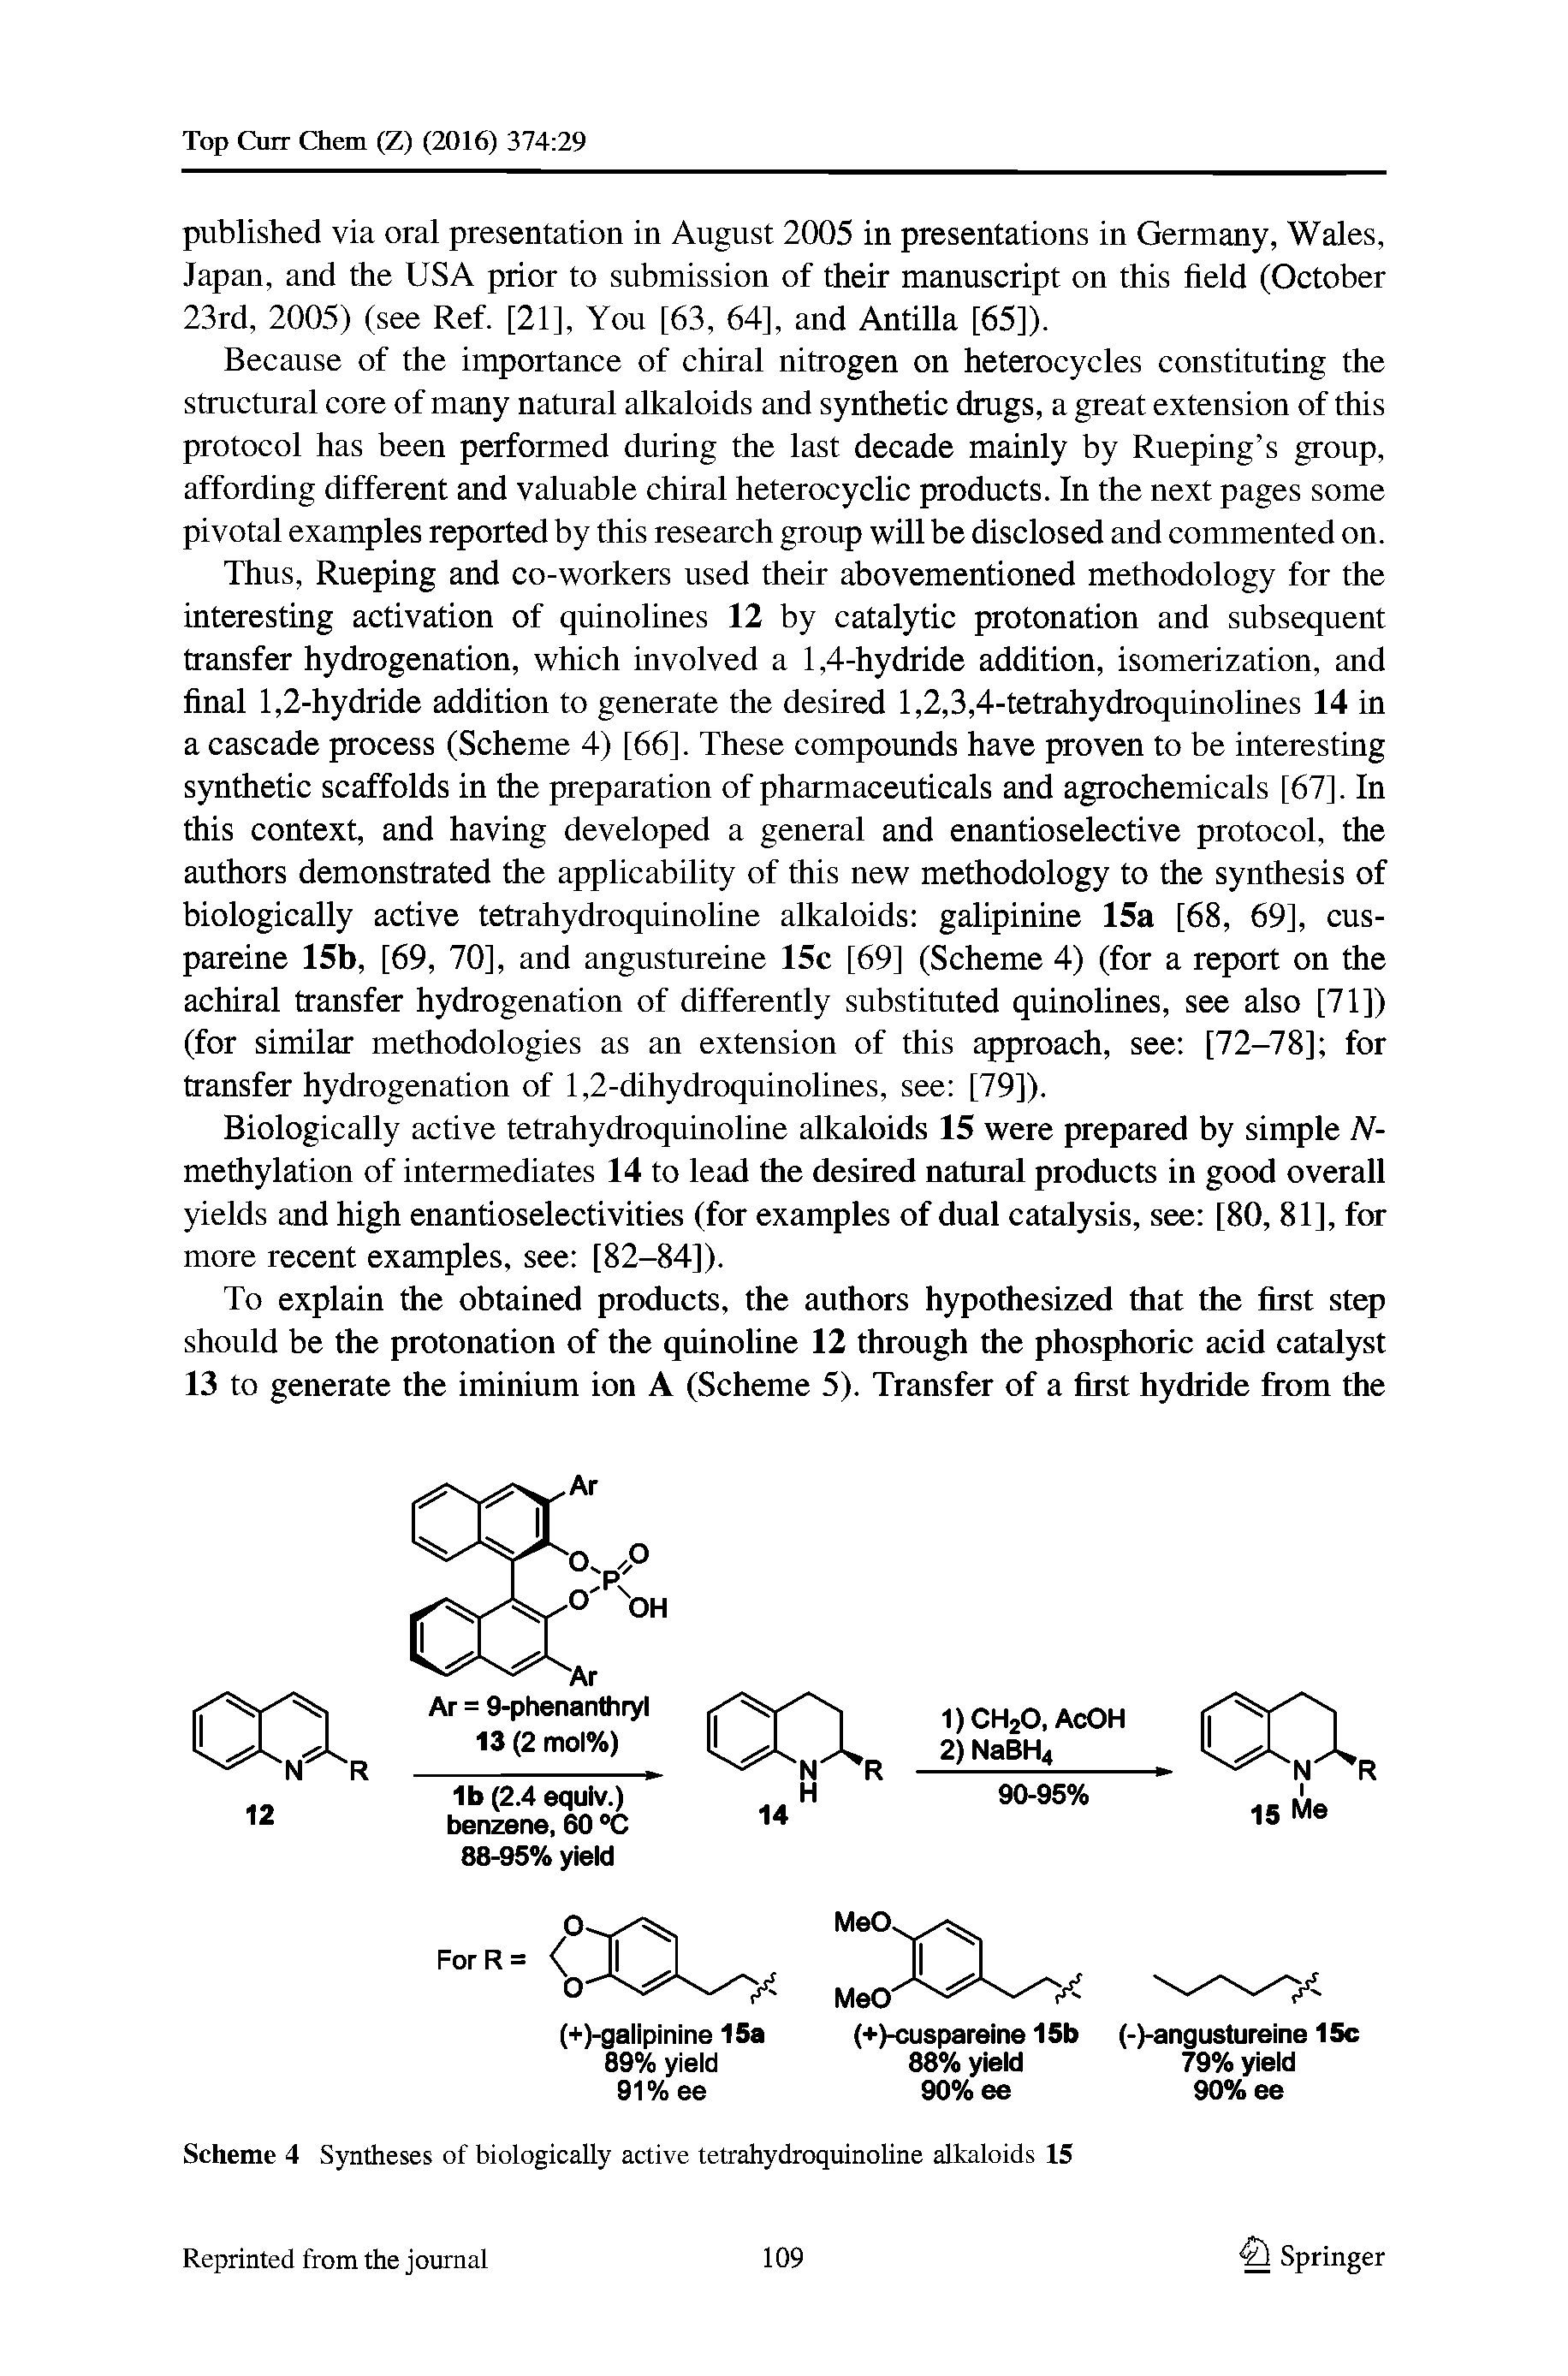 Scheme 4 Syntheses of biologically active tetrahydroquinoline alkaloids 15...